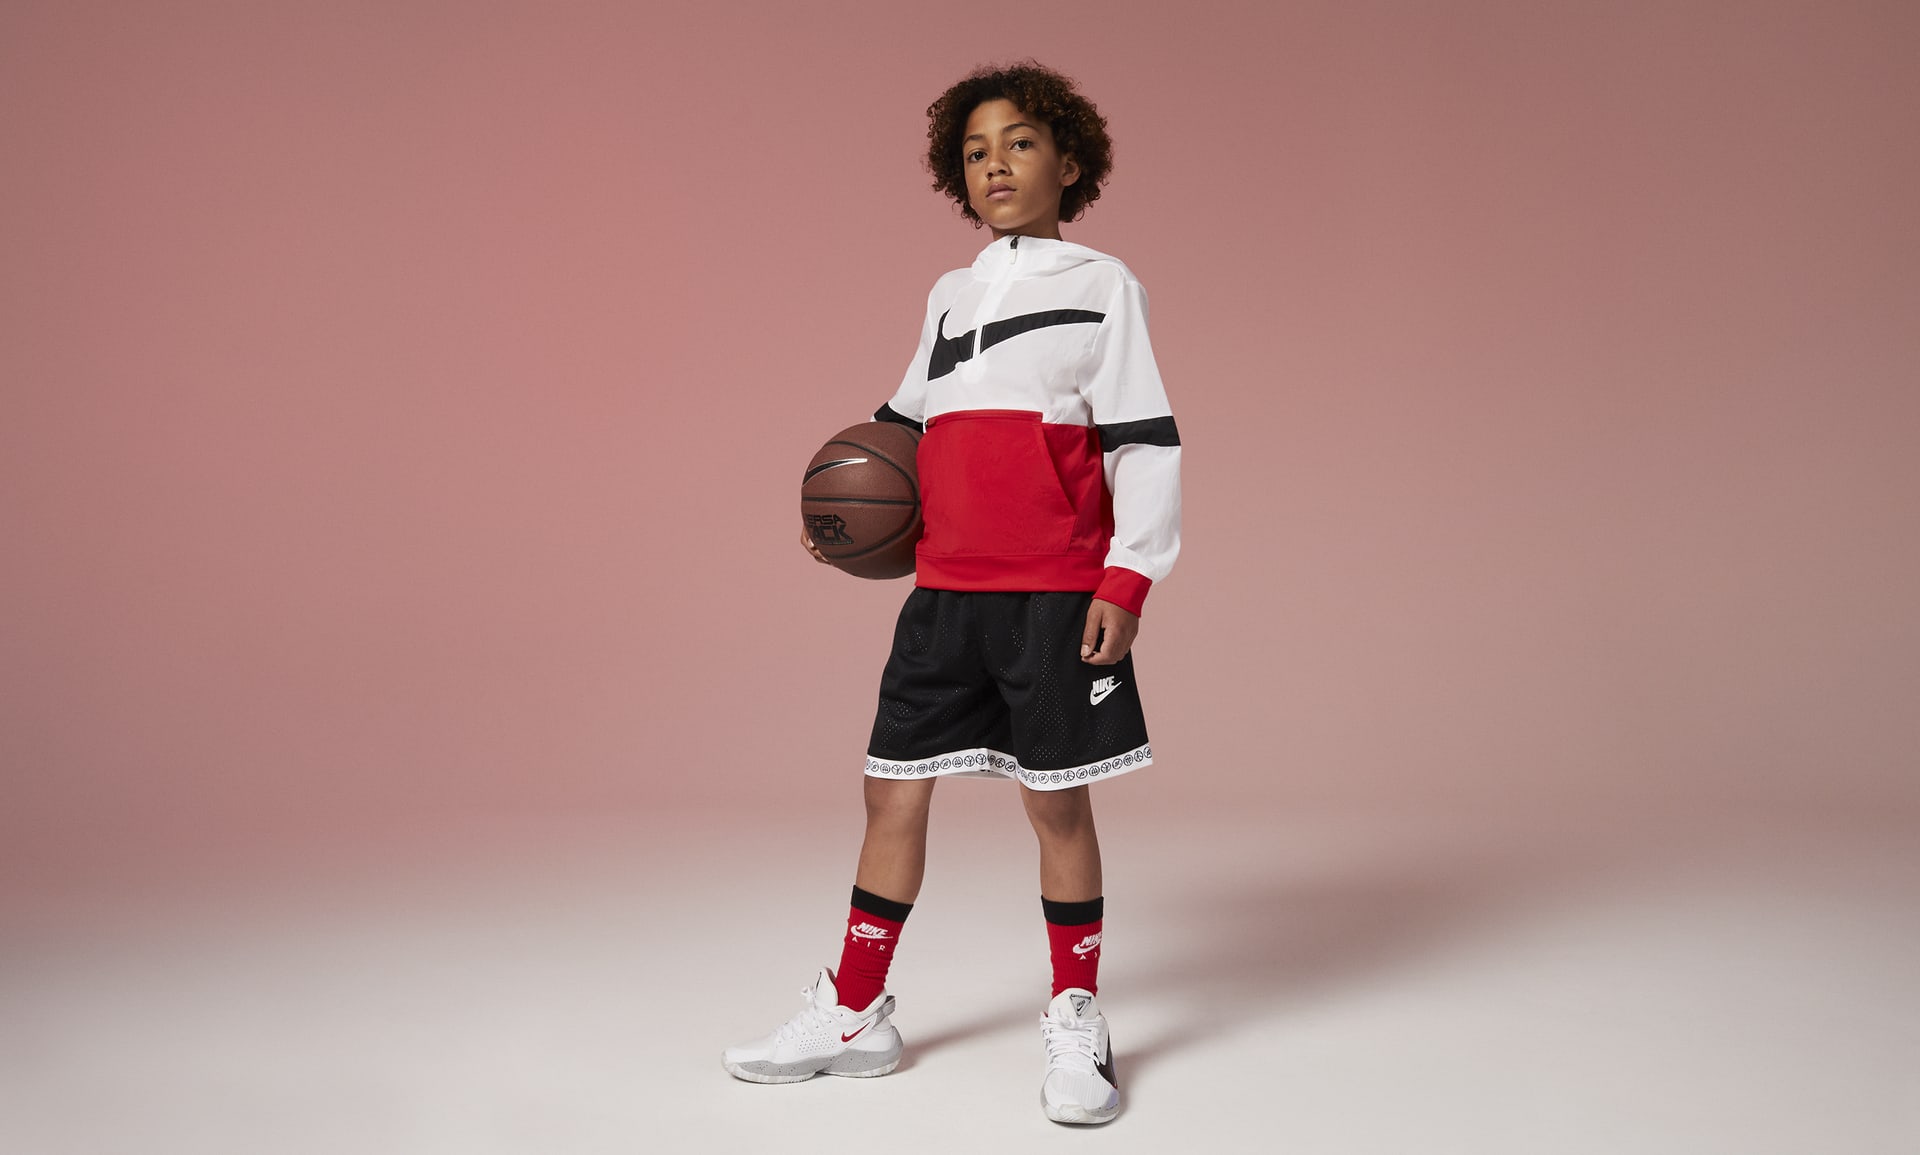 Nike Big Kids' Culture of Basketball Reversible Basketball Shorts